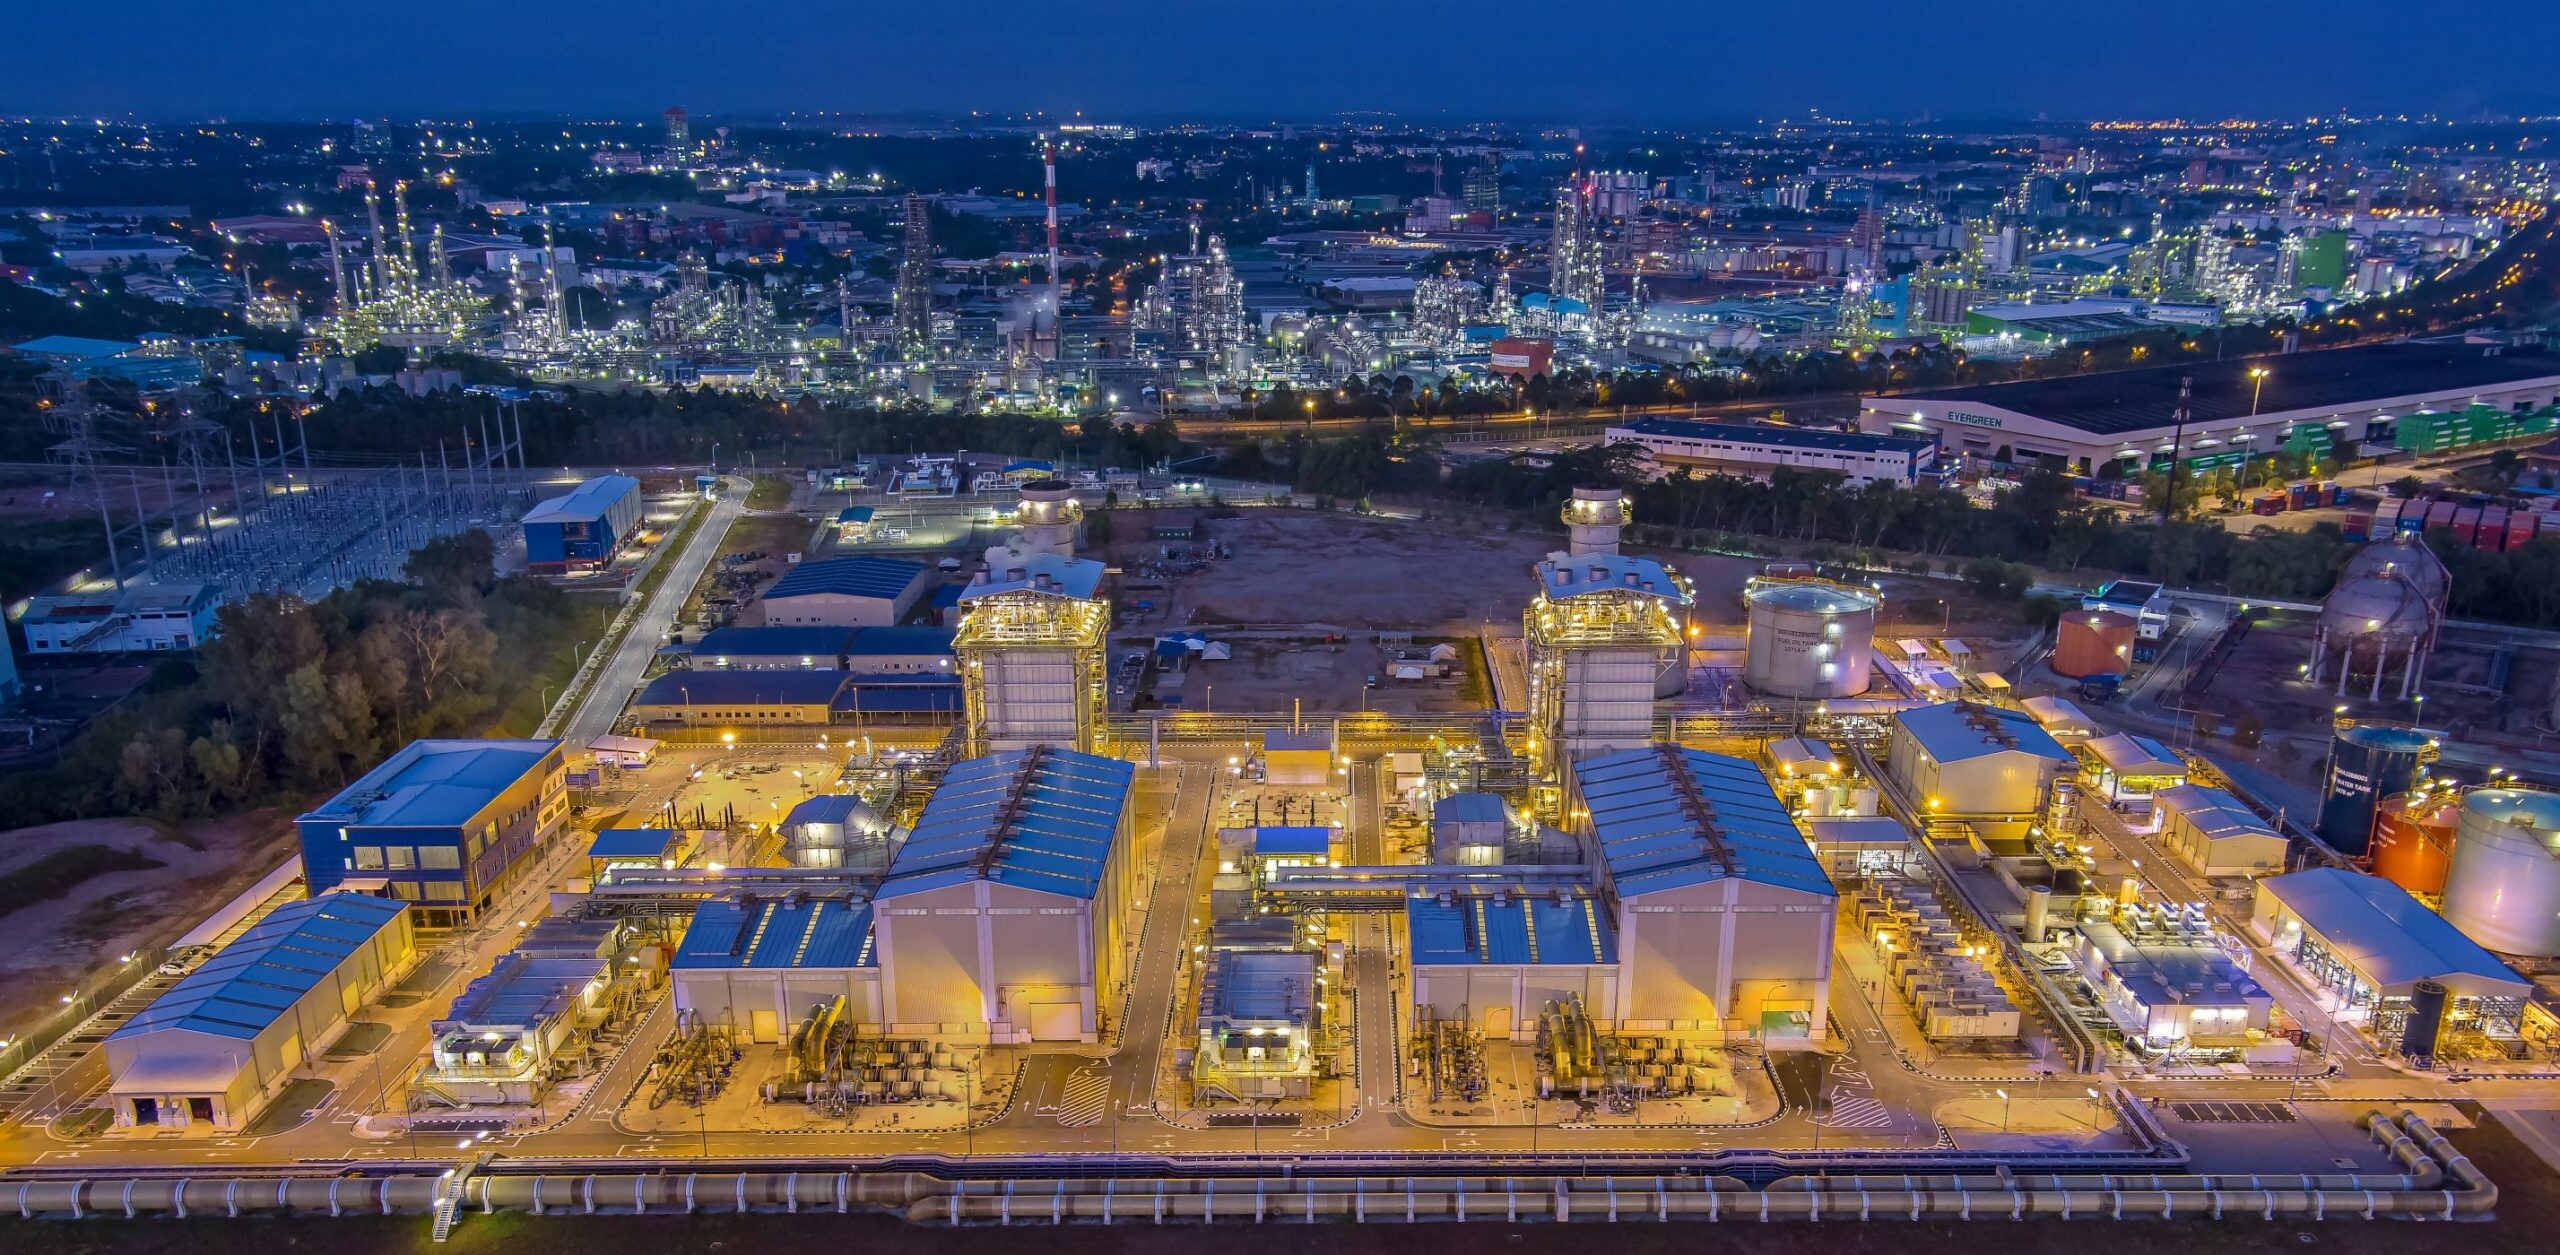 GE ประกาศจ่ายไฟในเชิงพาณิชย์เป็นครั้งแรก ด้วยเทคโนโลยีกังหันก๊าซระดับโลก 9HA.02 ที่โรงไฟฟ้า Track 4A ของบริษัท Southern Power Generation ในมาเลเซีย